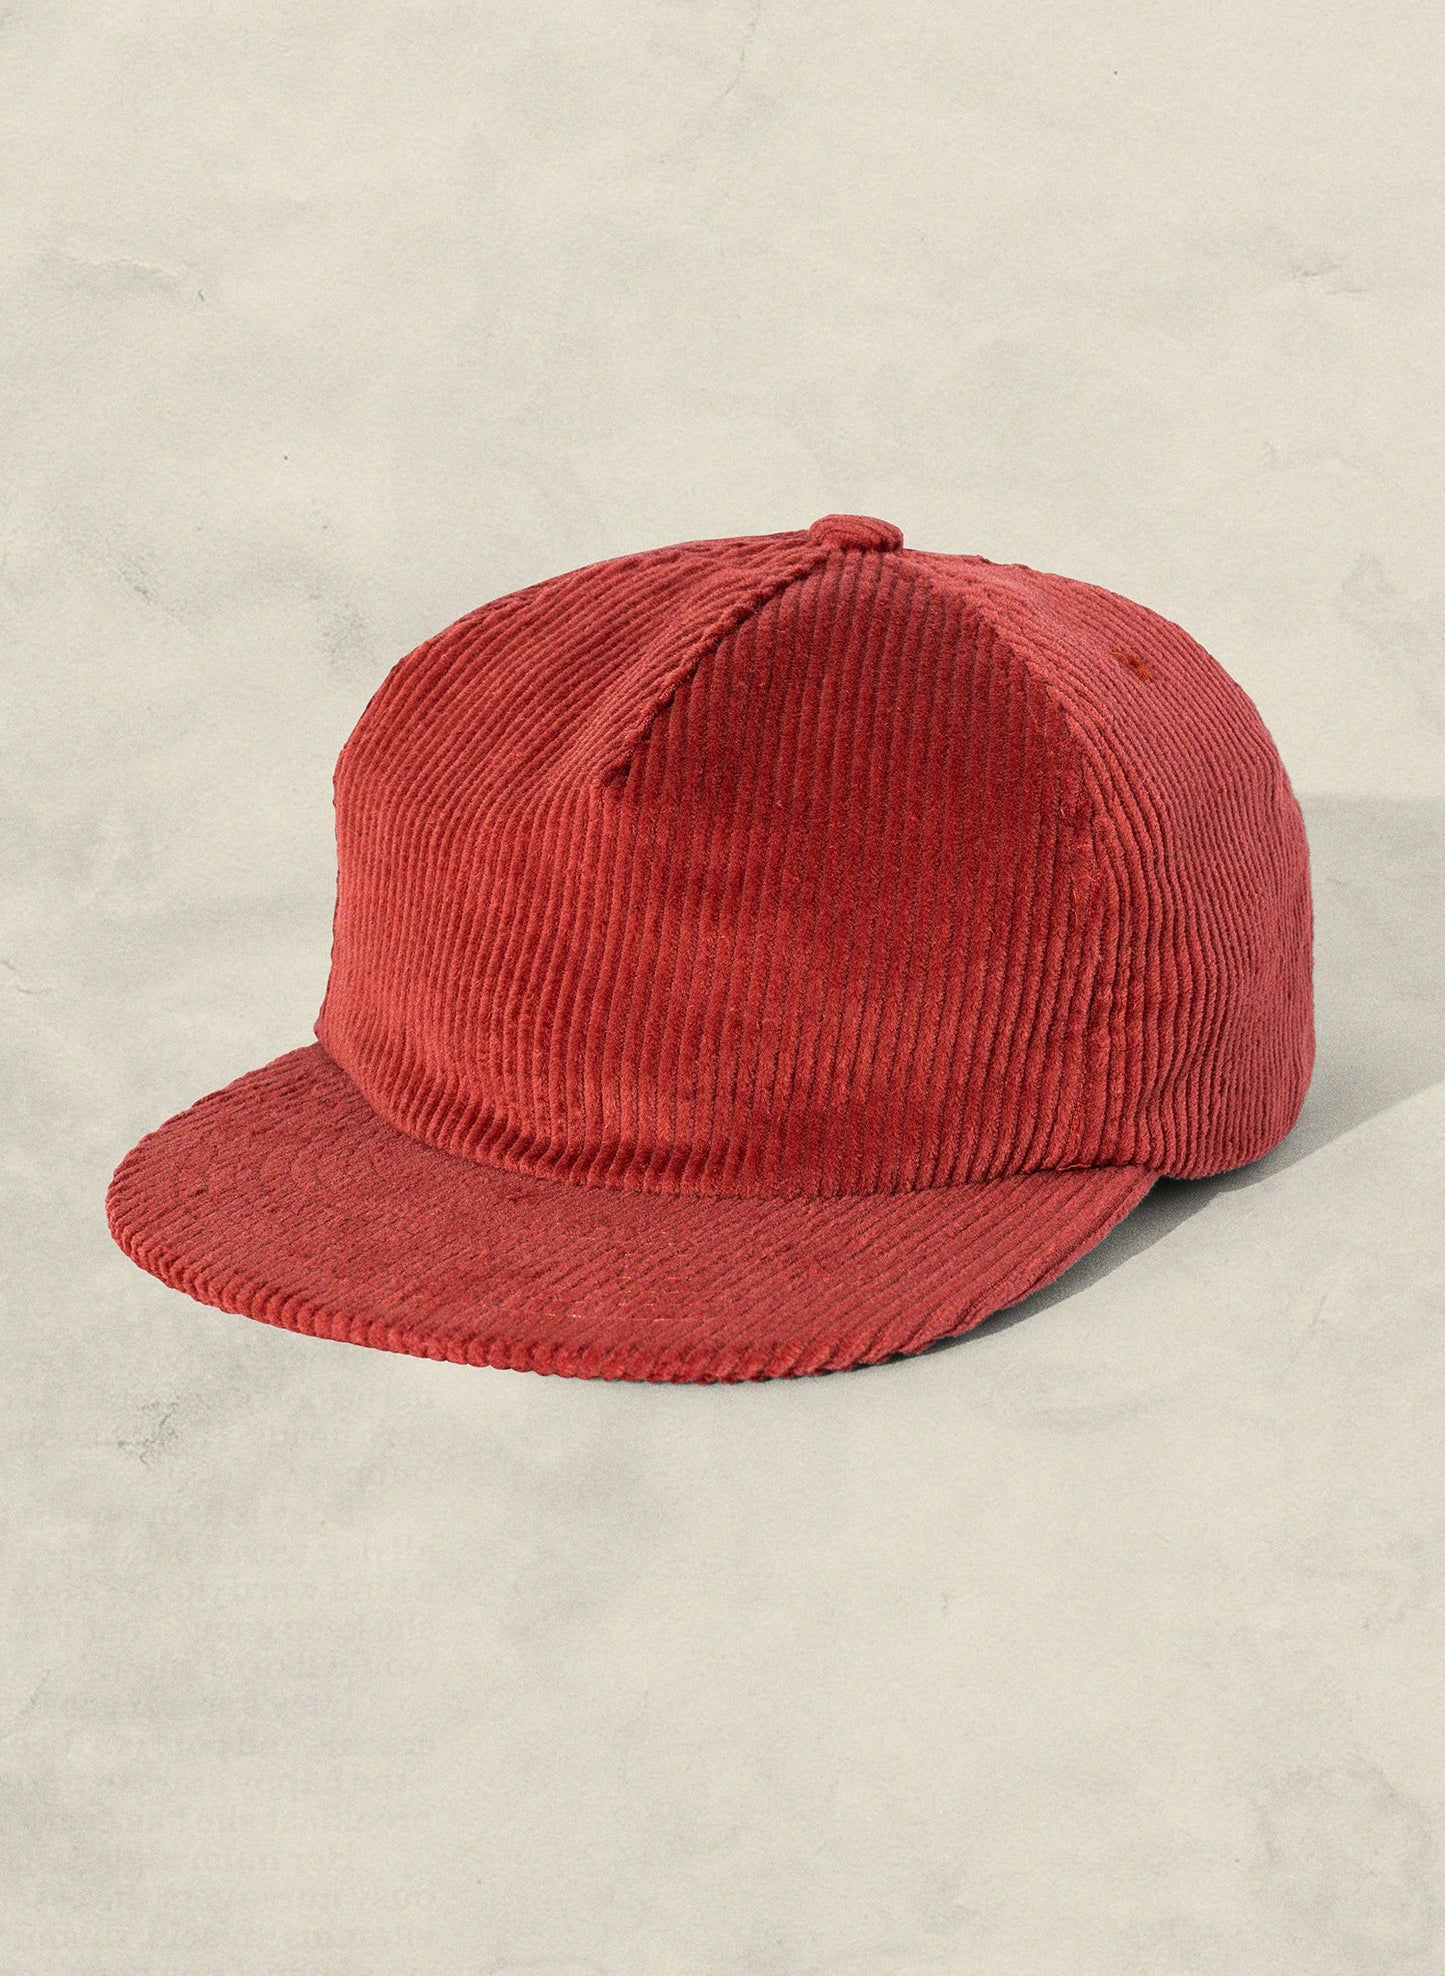 Weld Mfg Field Trip Hat - Unstructured 5 panel corduroy strapback hat, vintage inspired baseball hat, red